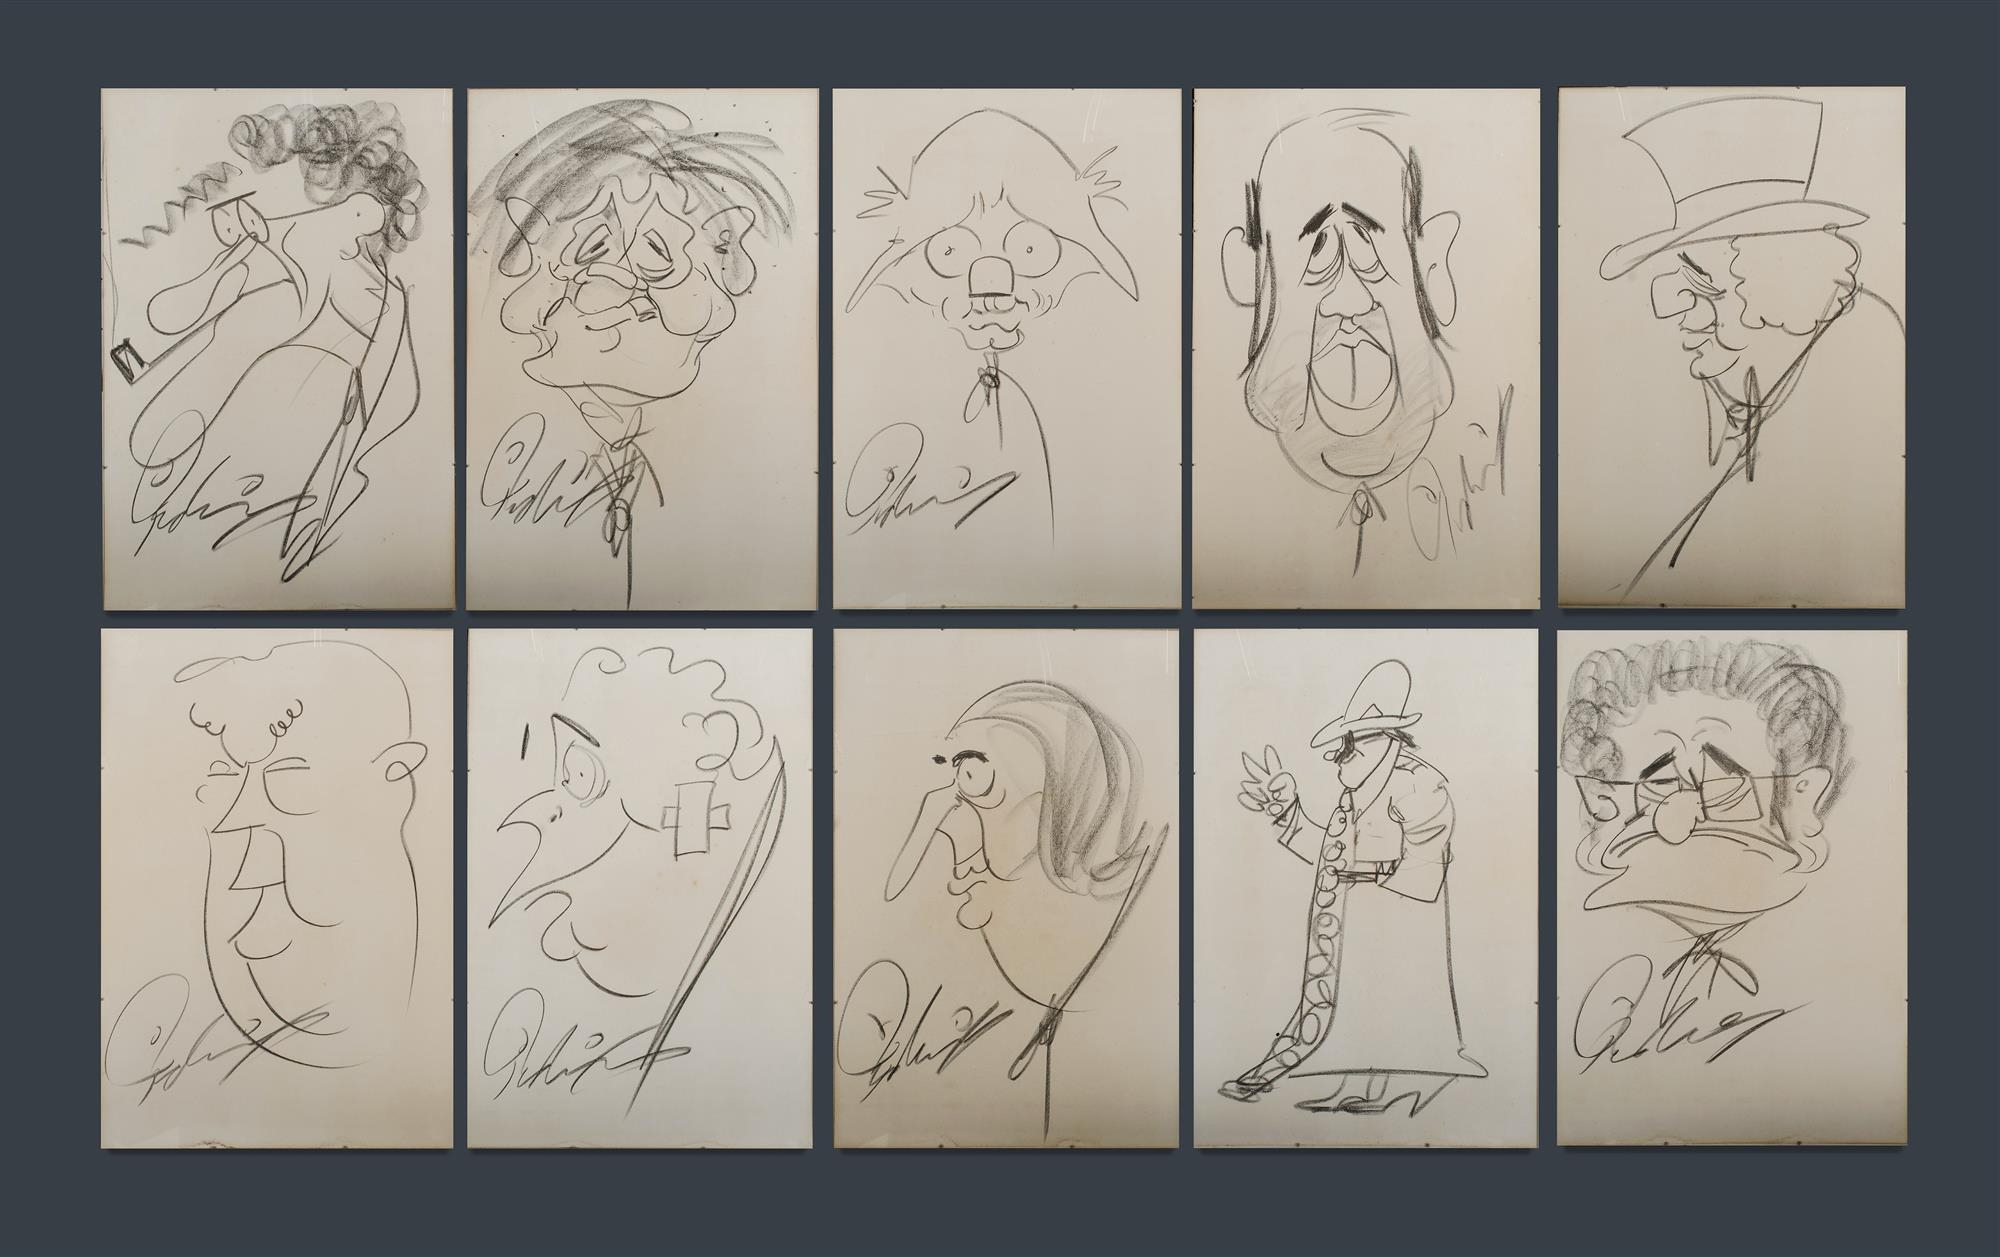 Ten Political Cartoons, Australian Political Figures from the 1970s & 80s. Subjects include Bob Hawke, Sir Robert Menzies, Sir John Kerr, Malcolm Fraser, Sir John Gorton etc - Larry Pickering